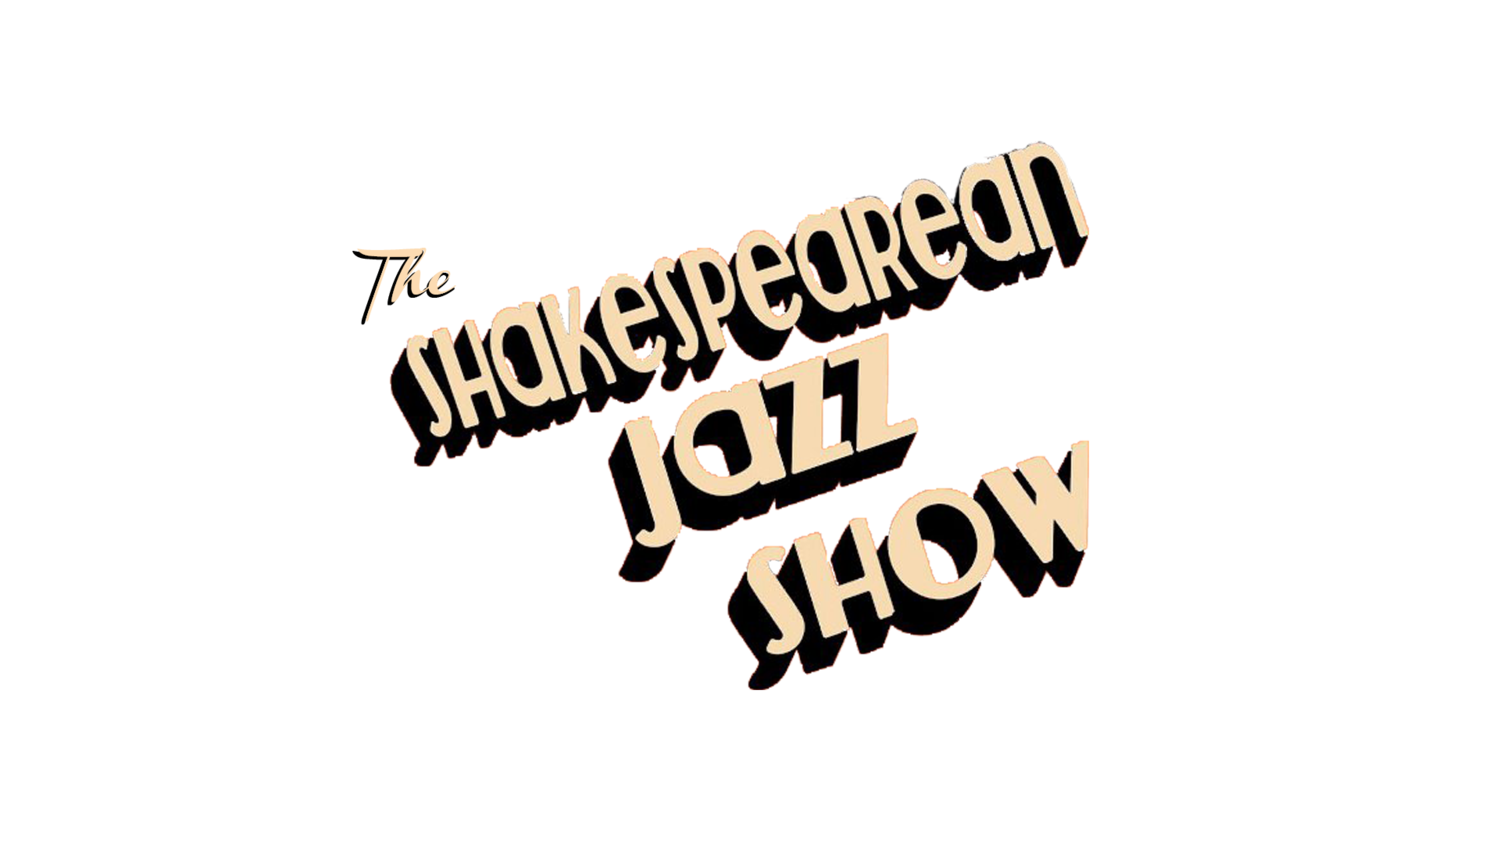 The Shakespearean Jazz Show